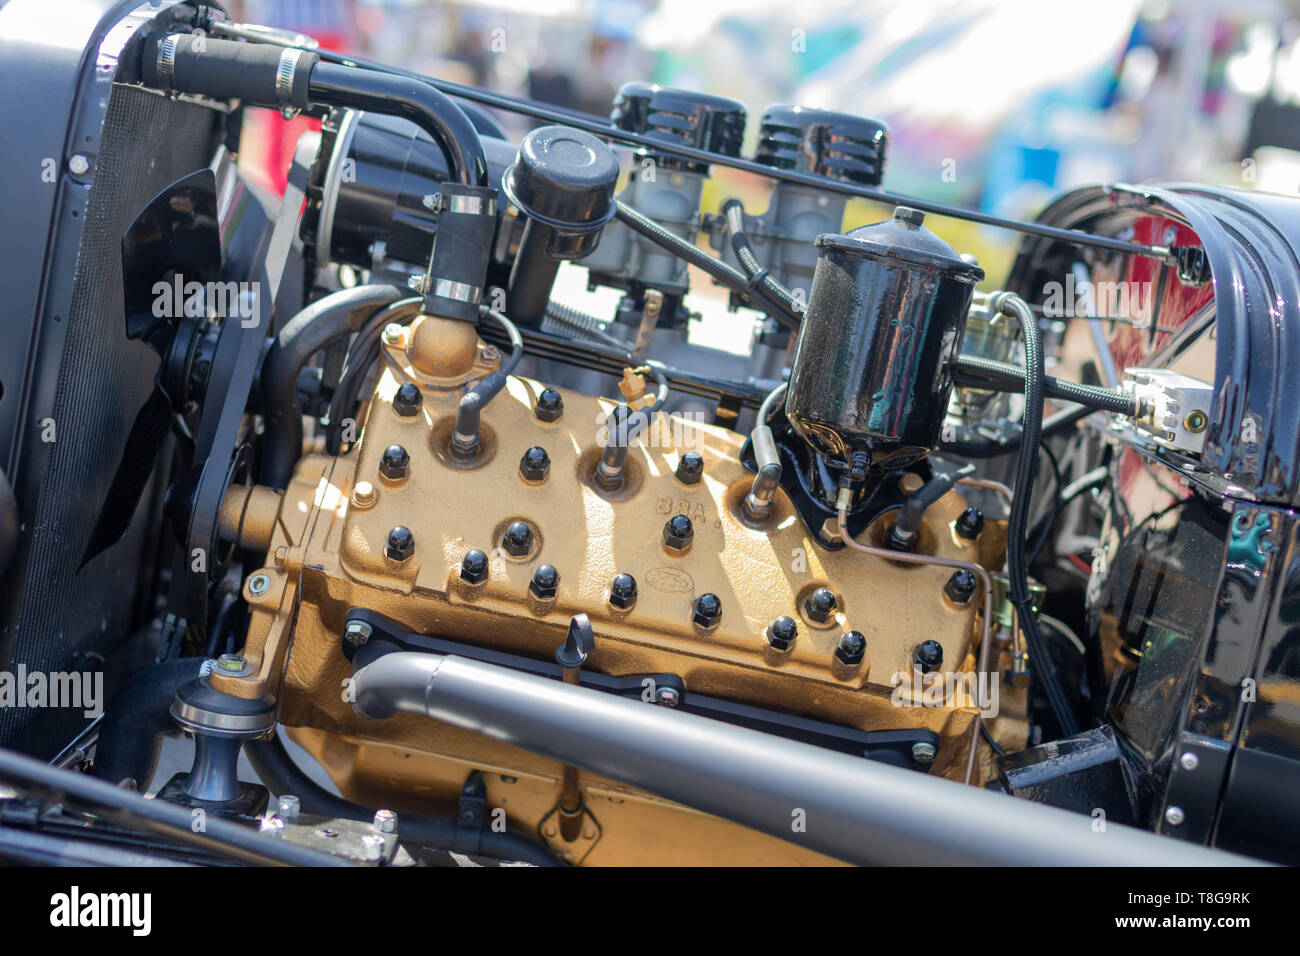 Restored car engine Stock Photo